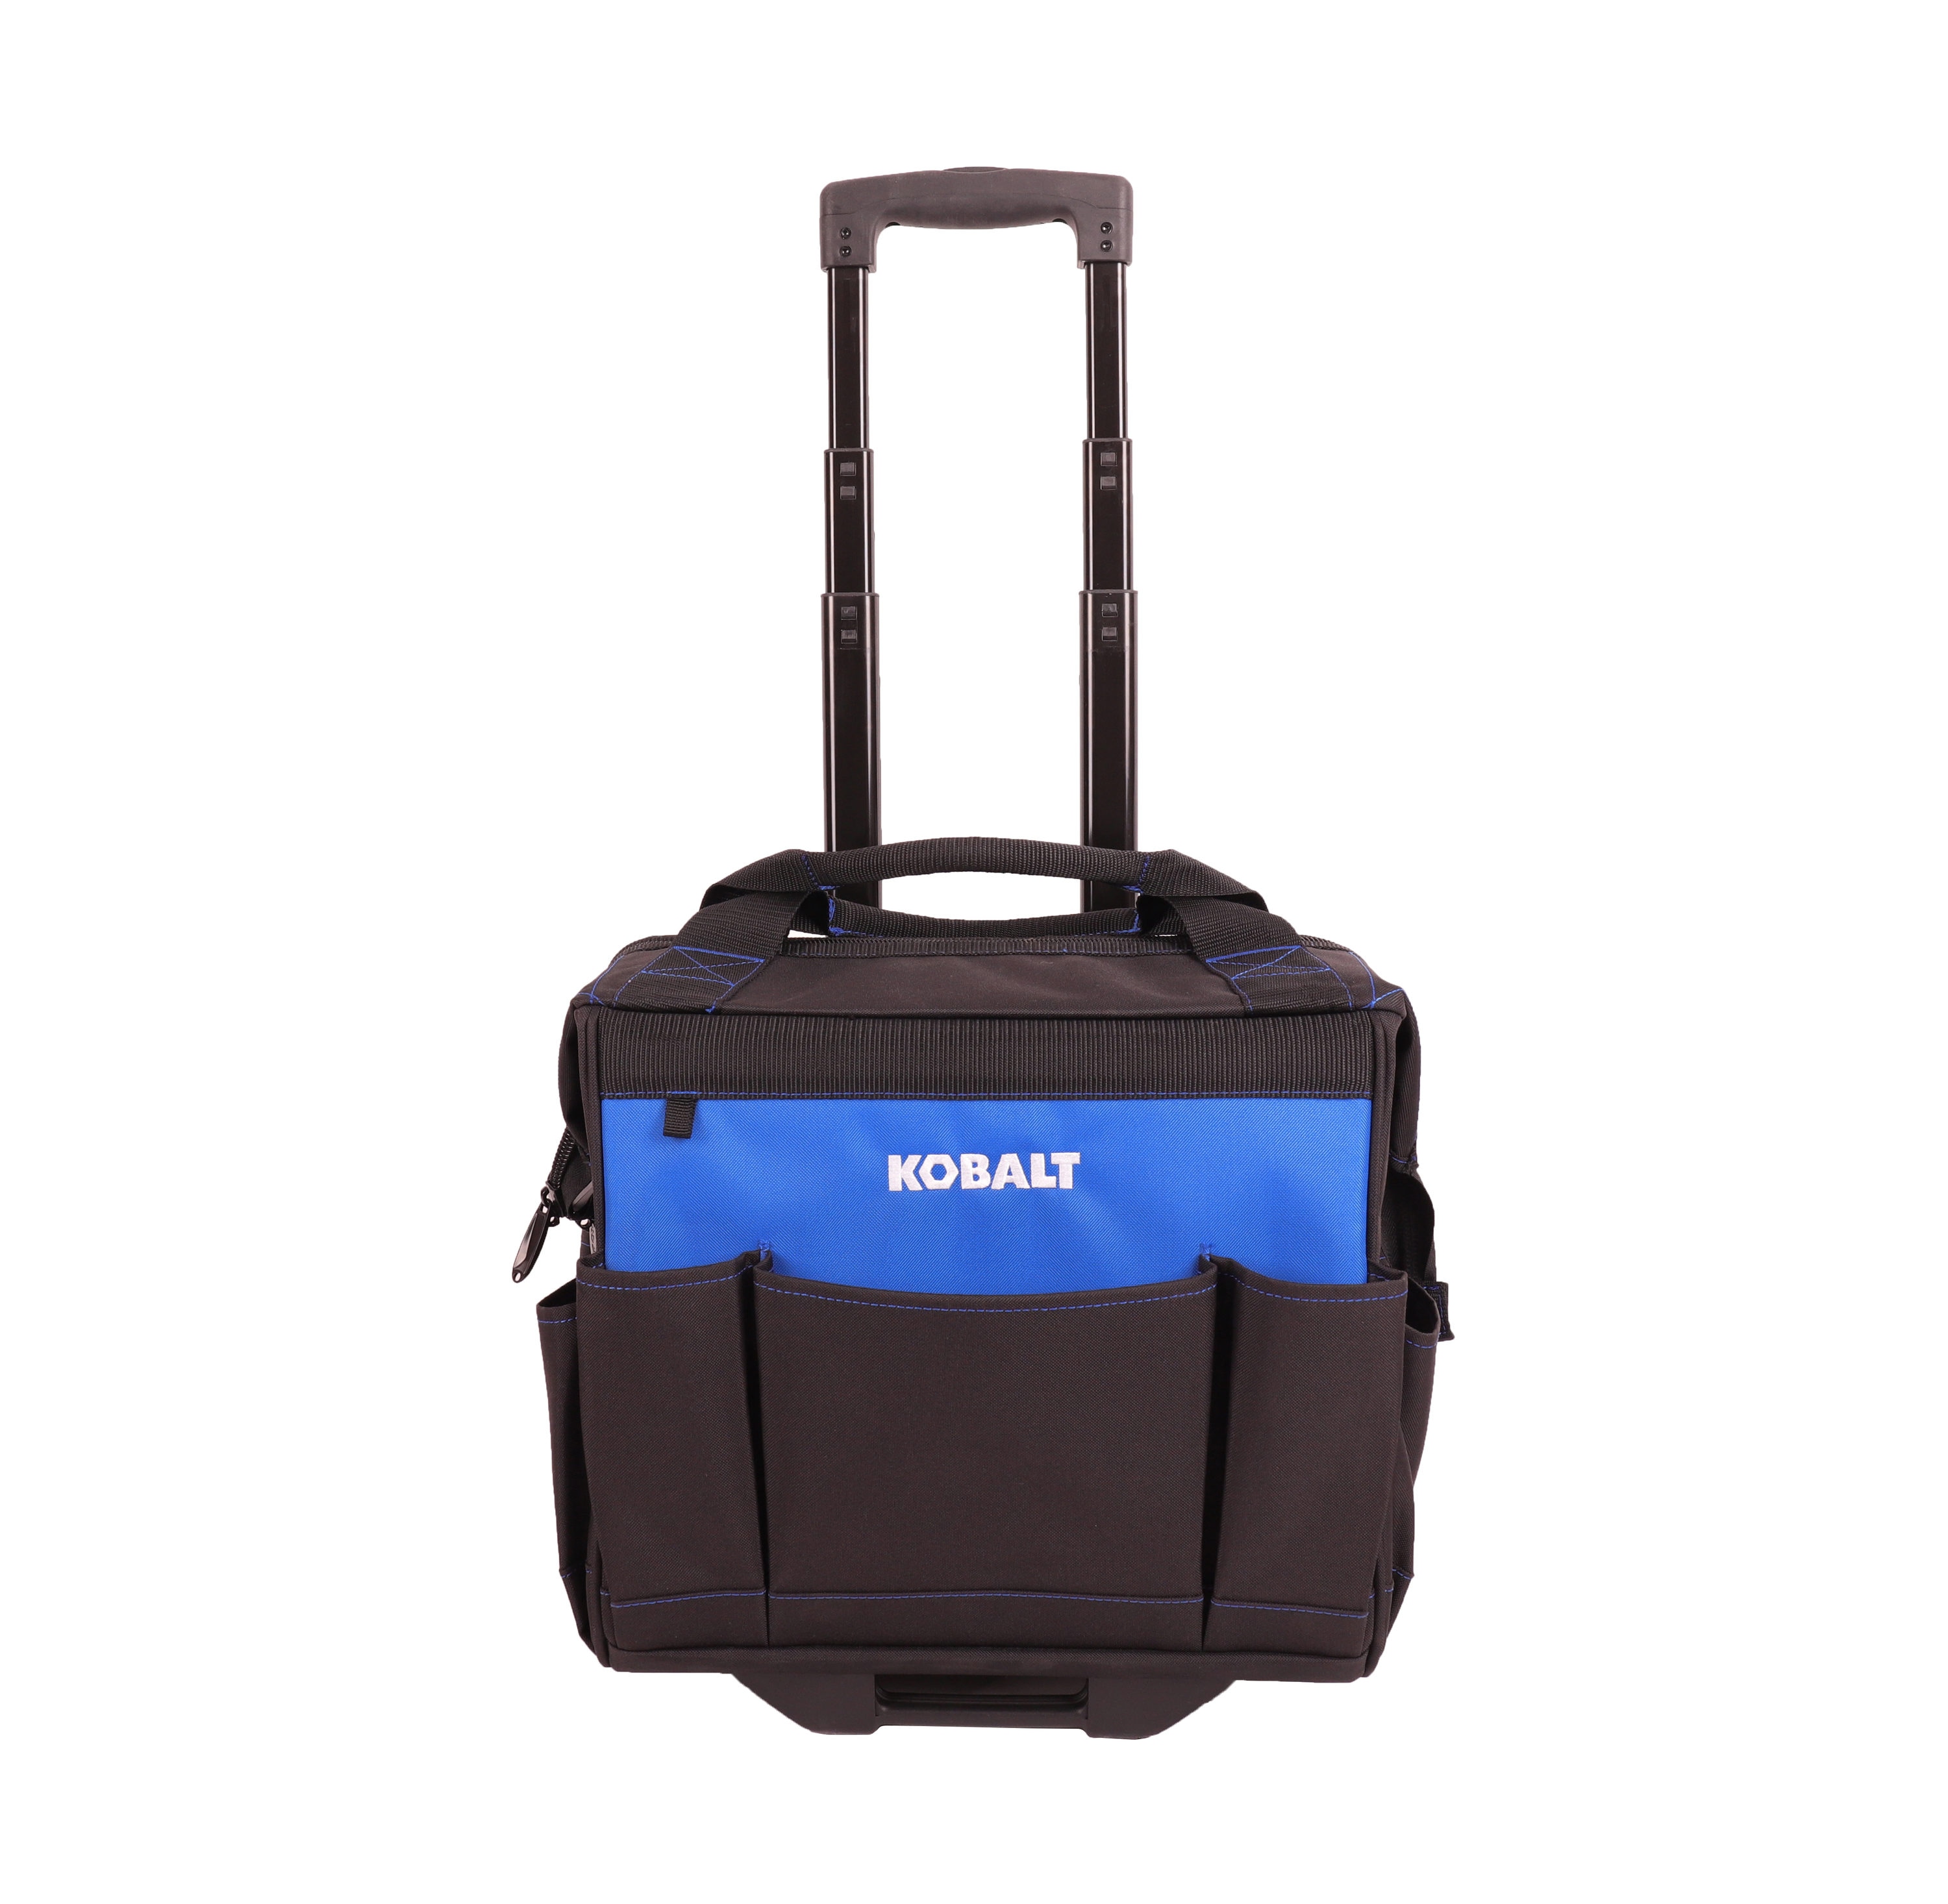 Kobalt Blue Black Polyester 14-in Rolling Tool Bag in the Tool